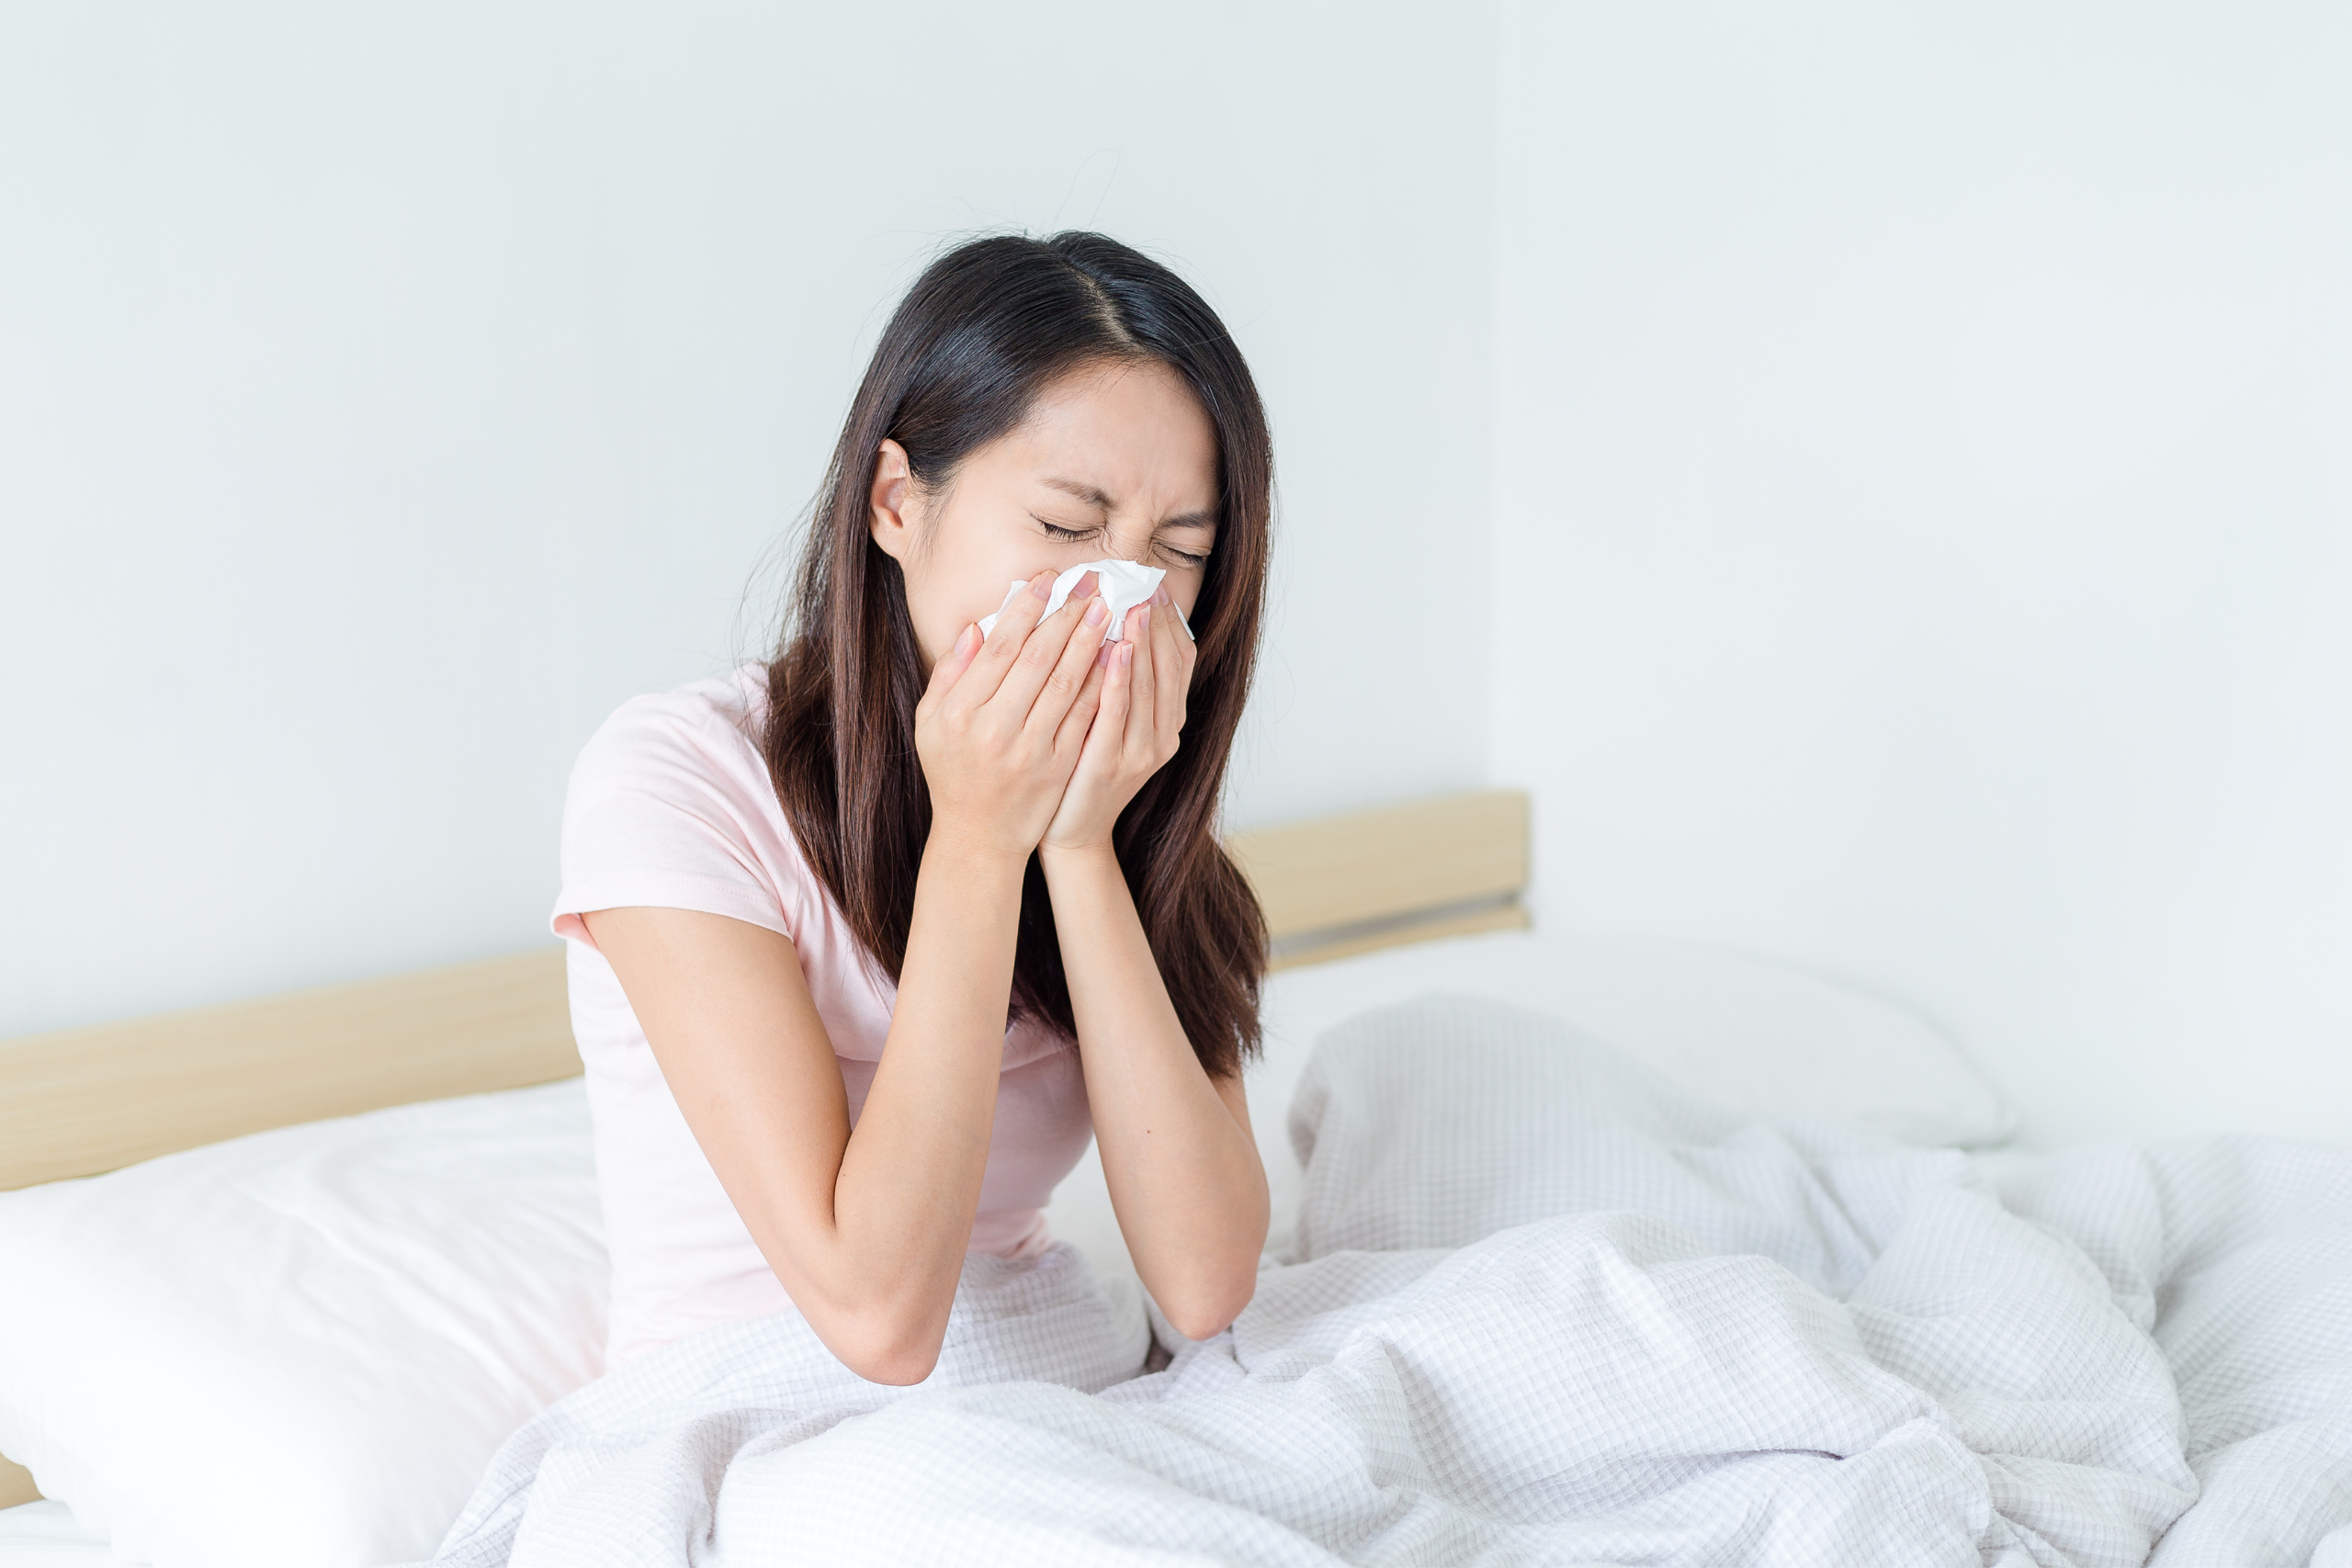 Woman sneezes in bed